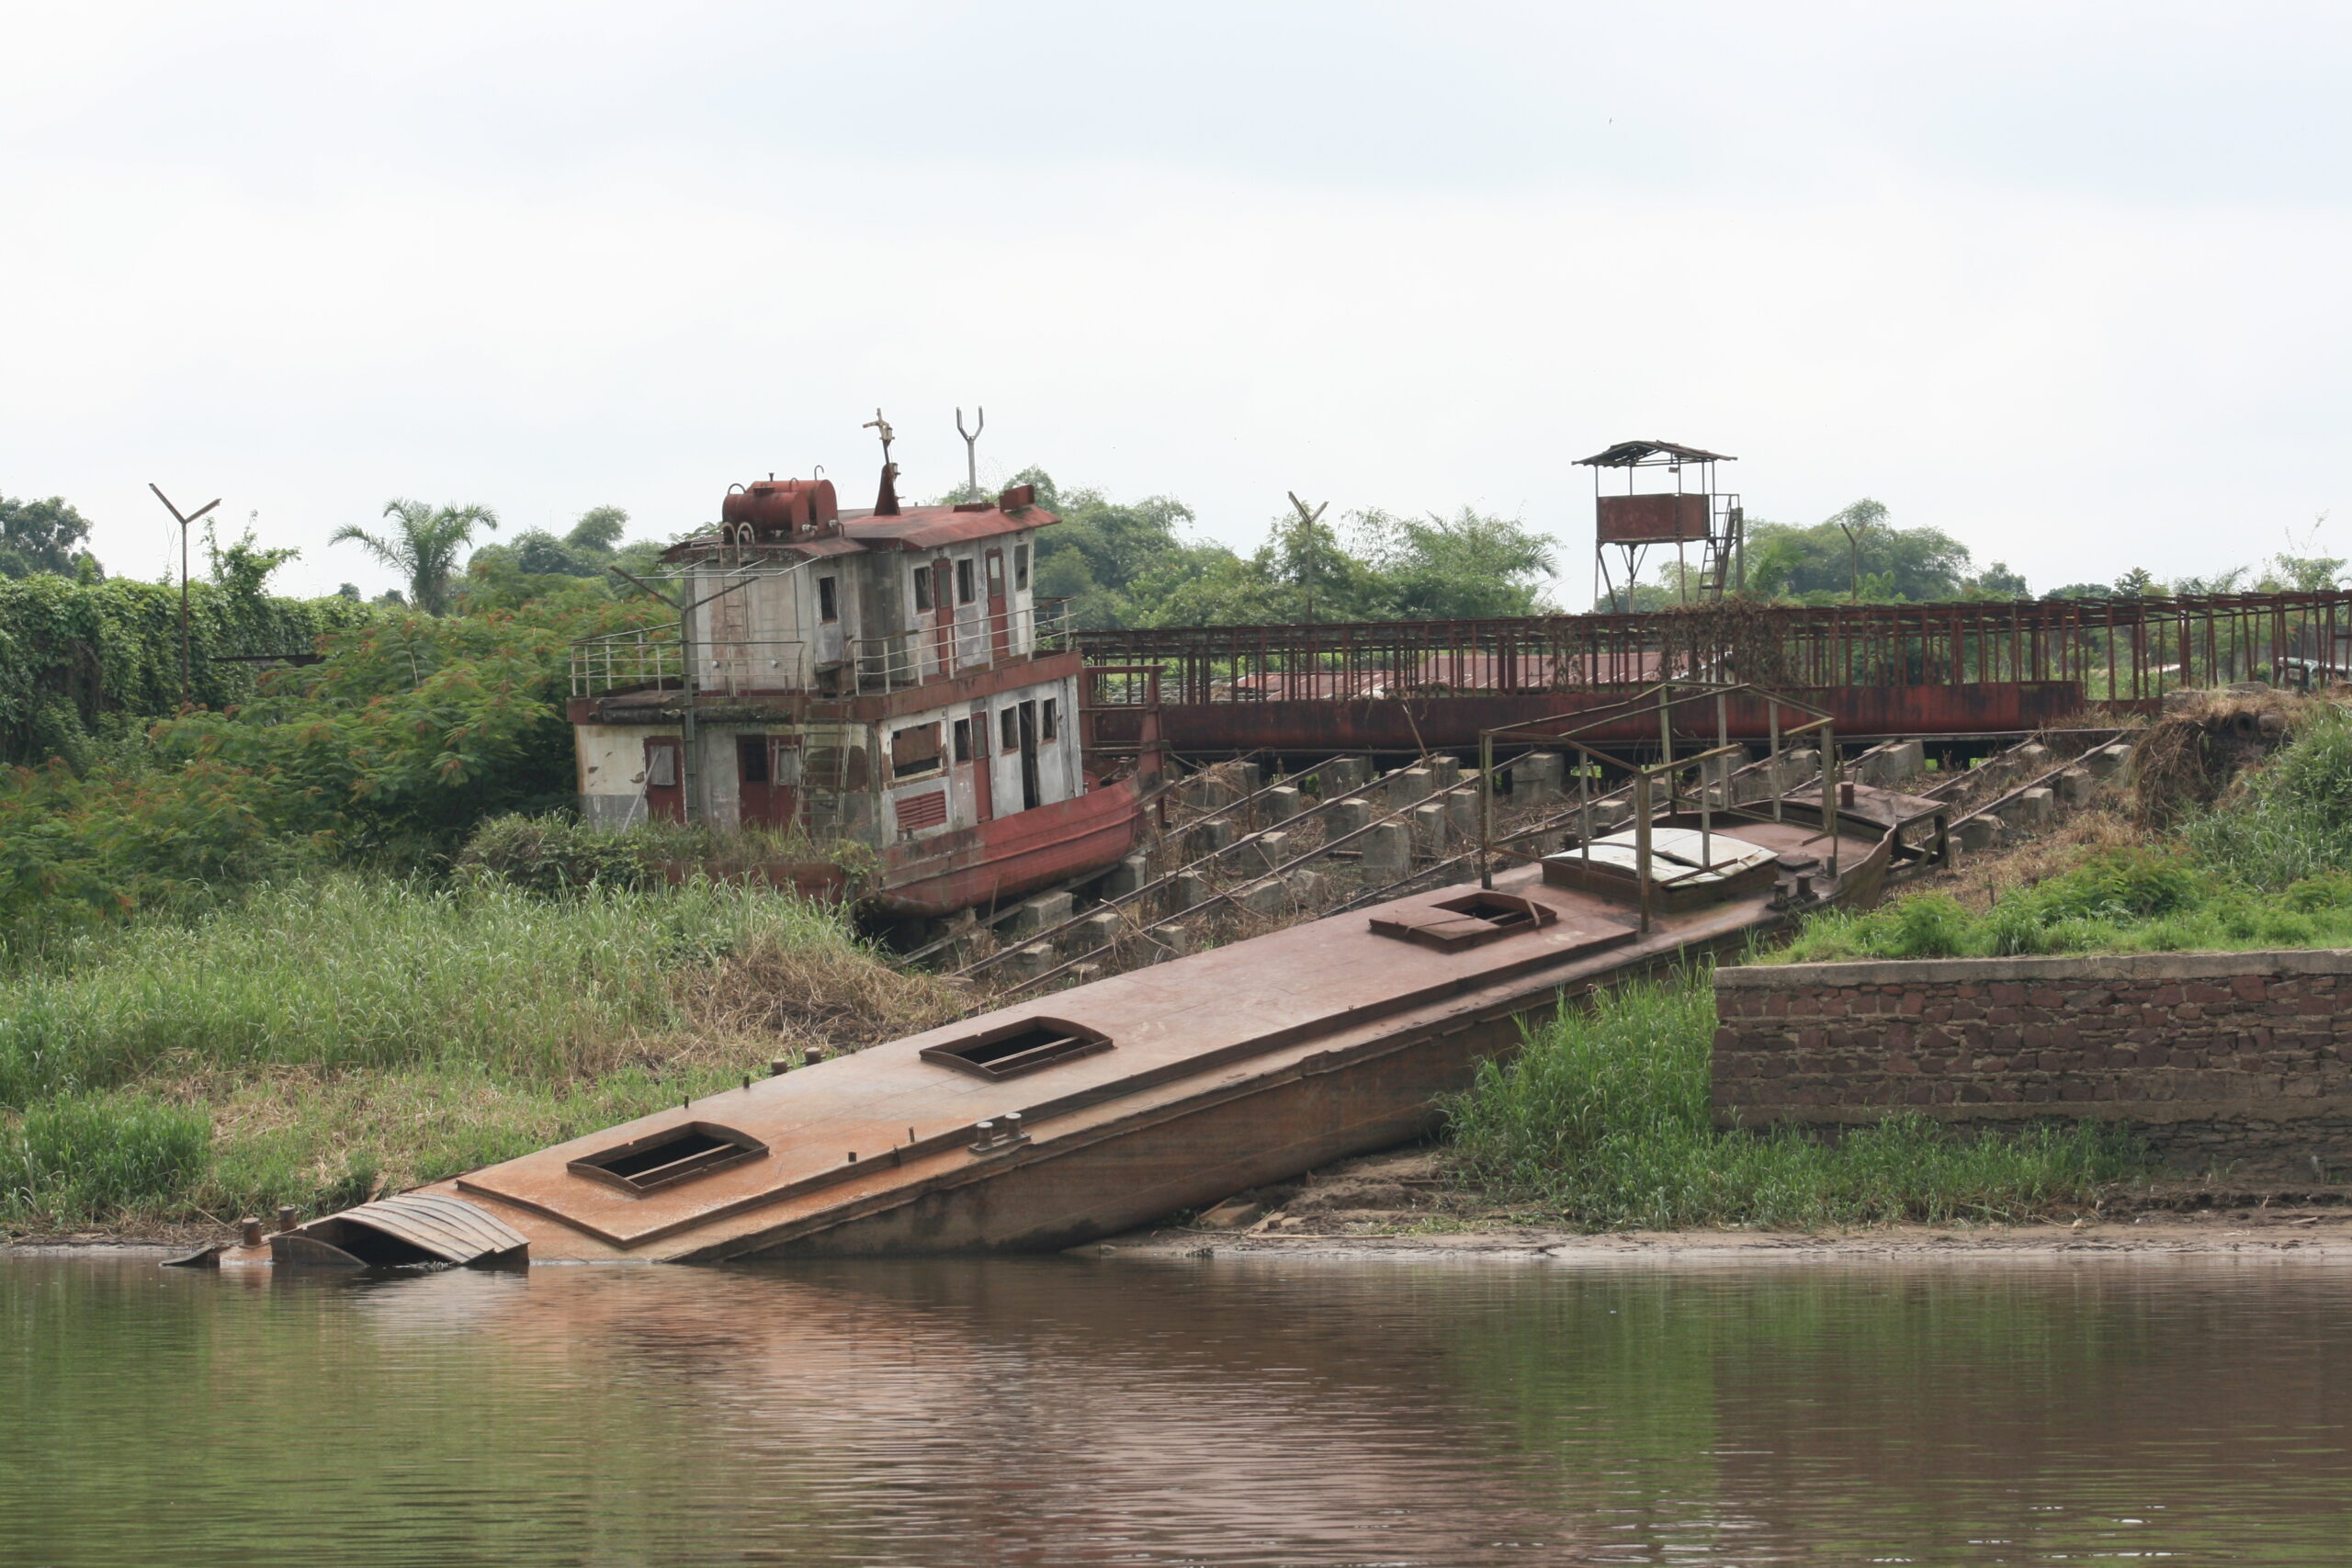 Old derelict Congo River boats